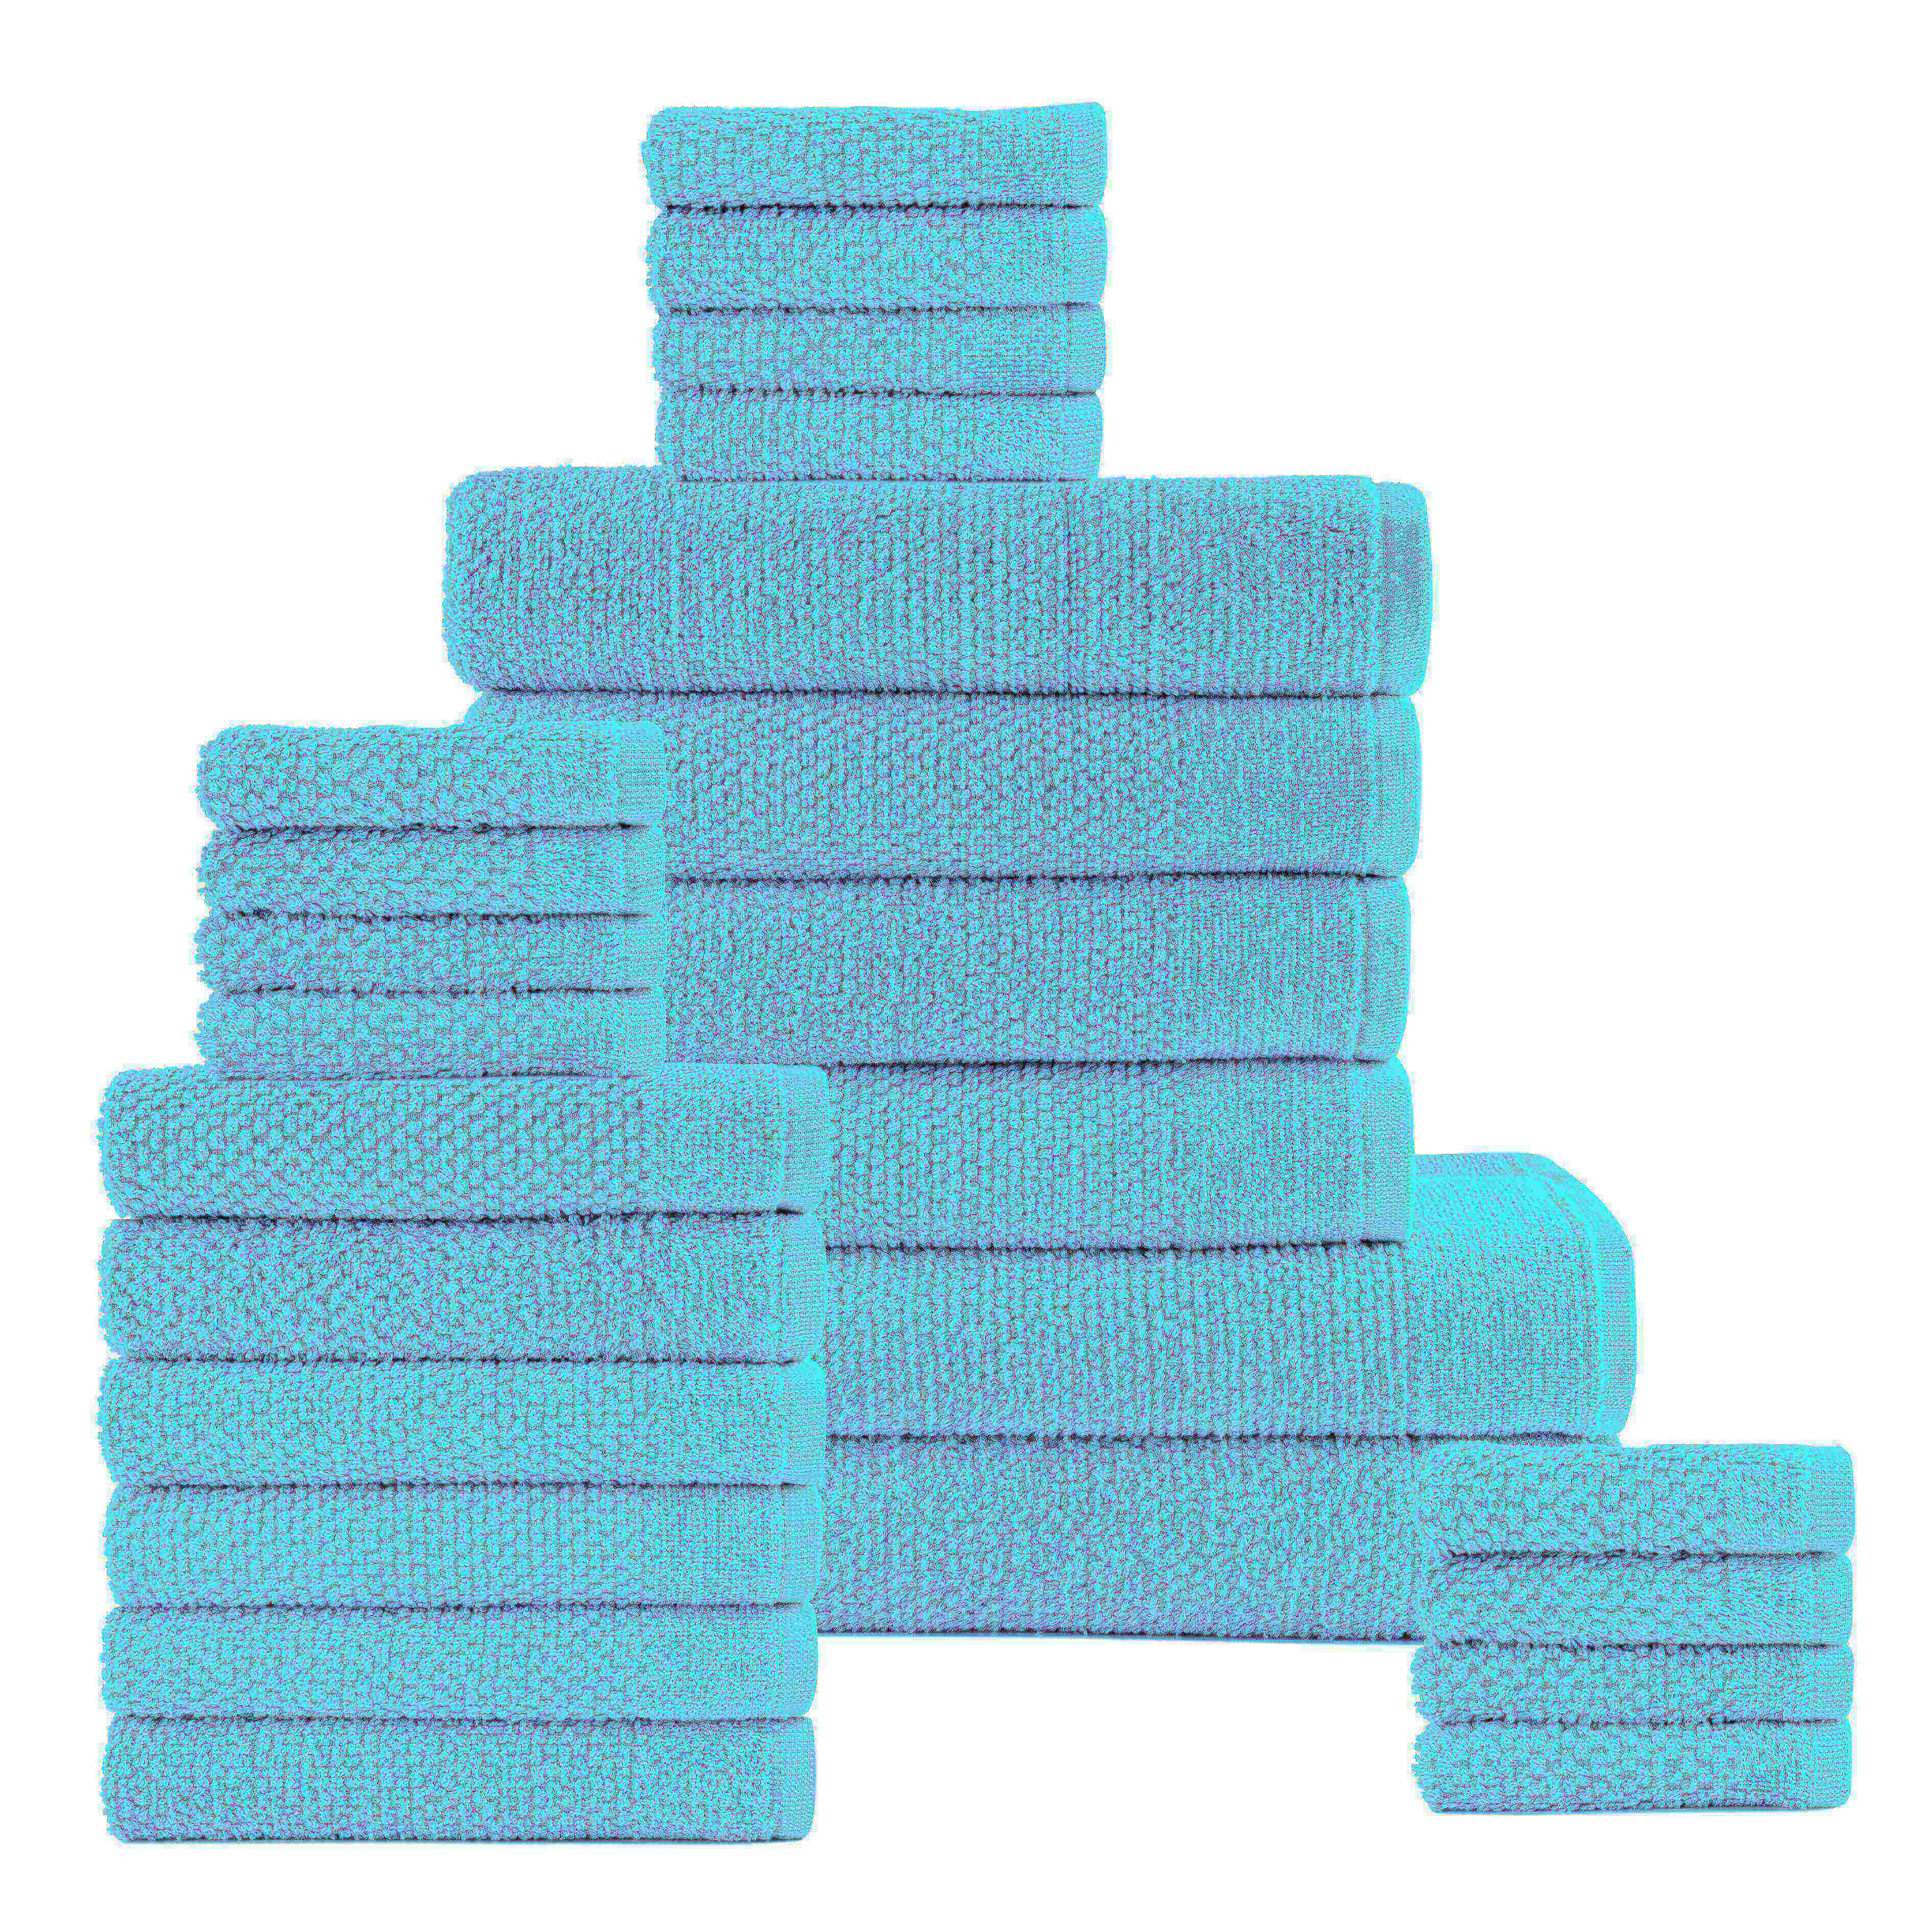 Aqua Colour of 24 Piece Popcorn Cotton Bath Towel Set